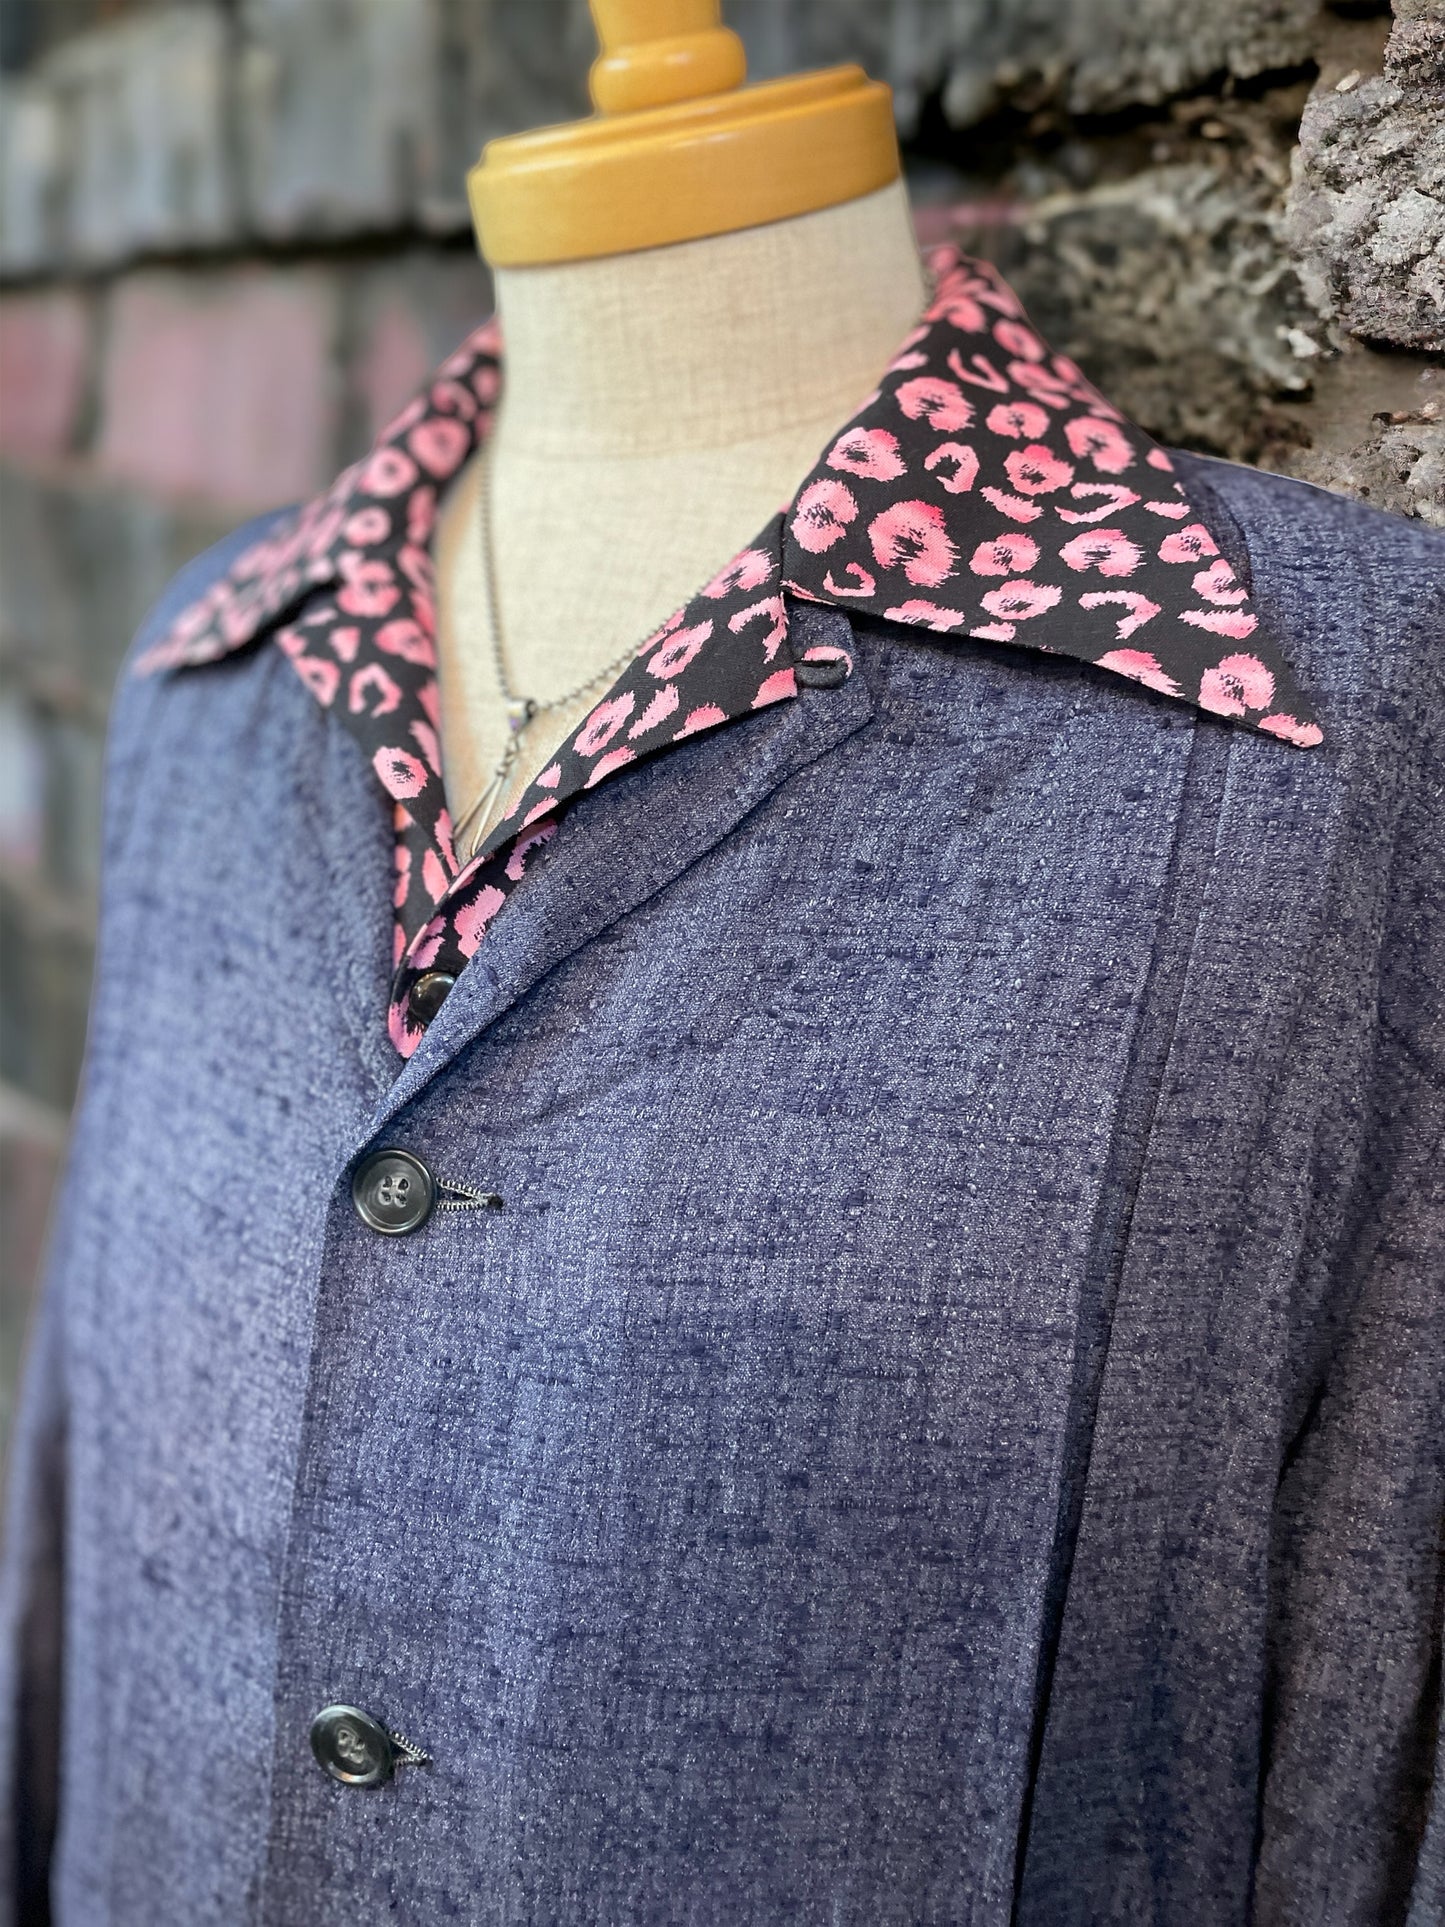 Long Sleeve Rayon Print Shirt「Black&Pink Leopard」/長袖レーヨンプリントシャツ「ブラック＆ピンクレオパード」